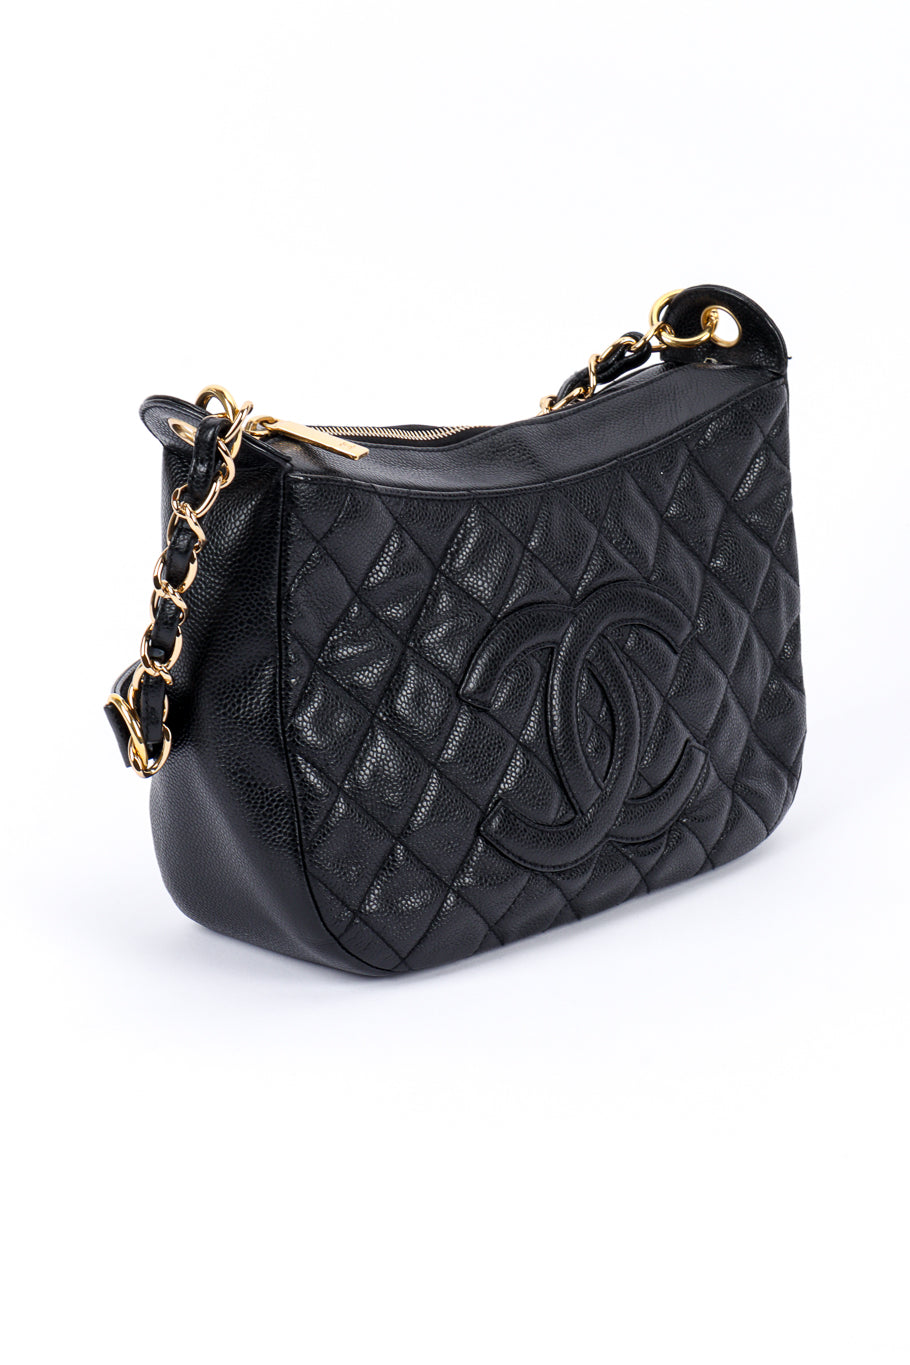 Chanel Quilted CC Shoulder Bag 3/4 front @recess la